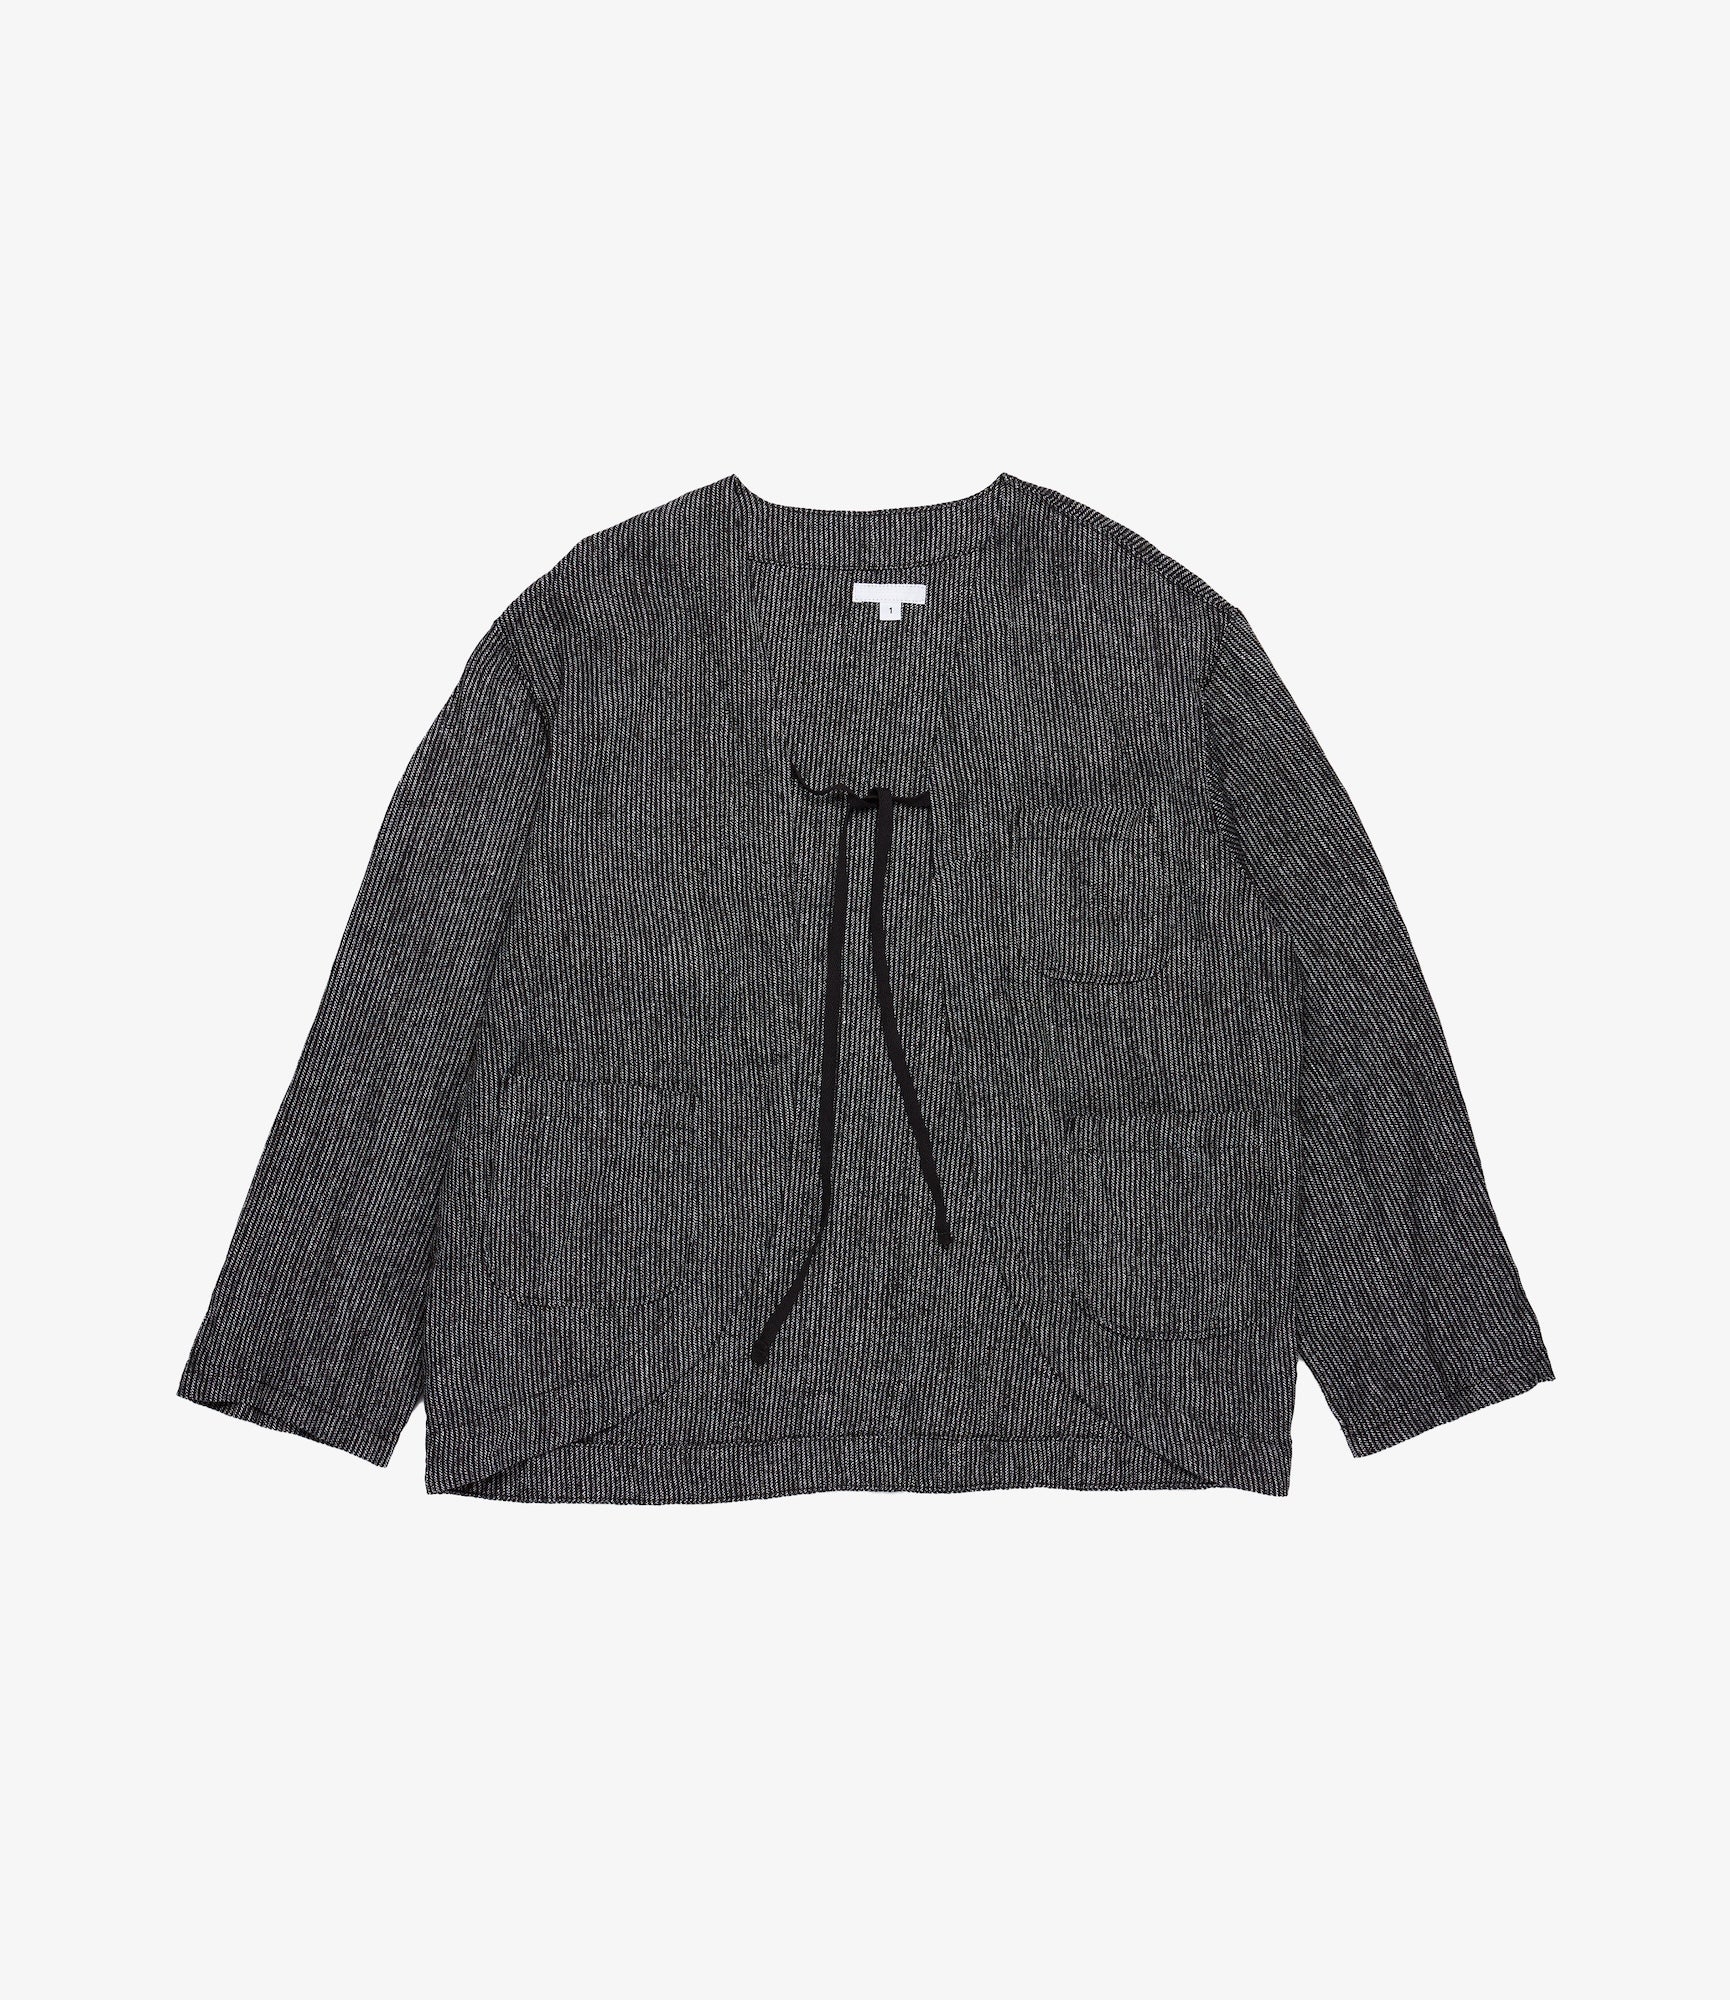 Engineered Garments Cutaway Jacket - Black/Grey Linen Stripe